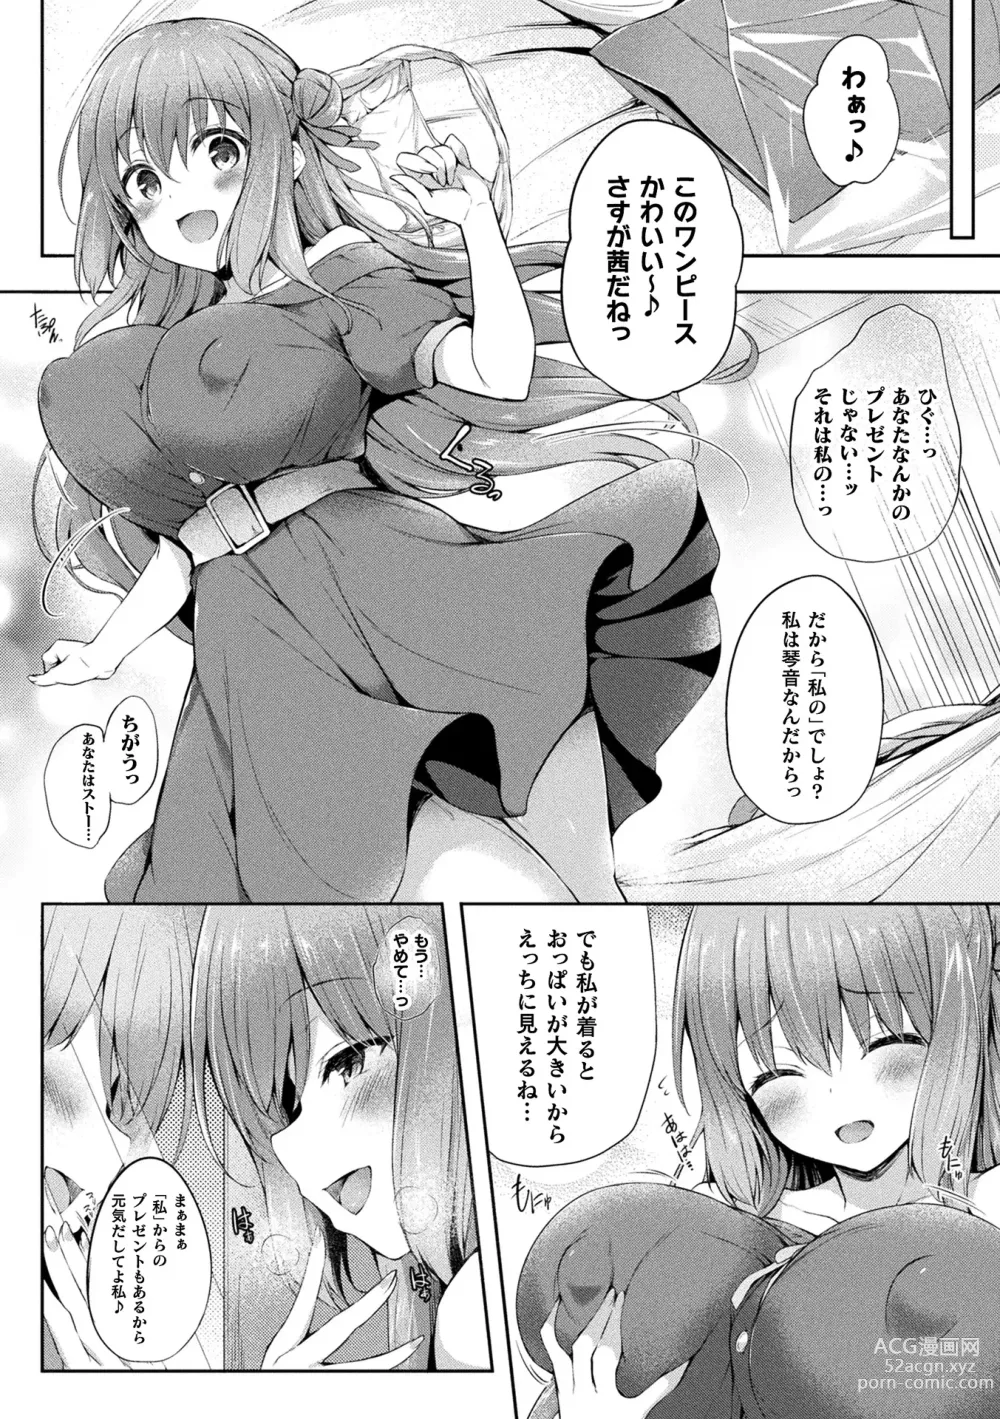 Page 24 of manga Kawari Kawatte Genteiban